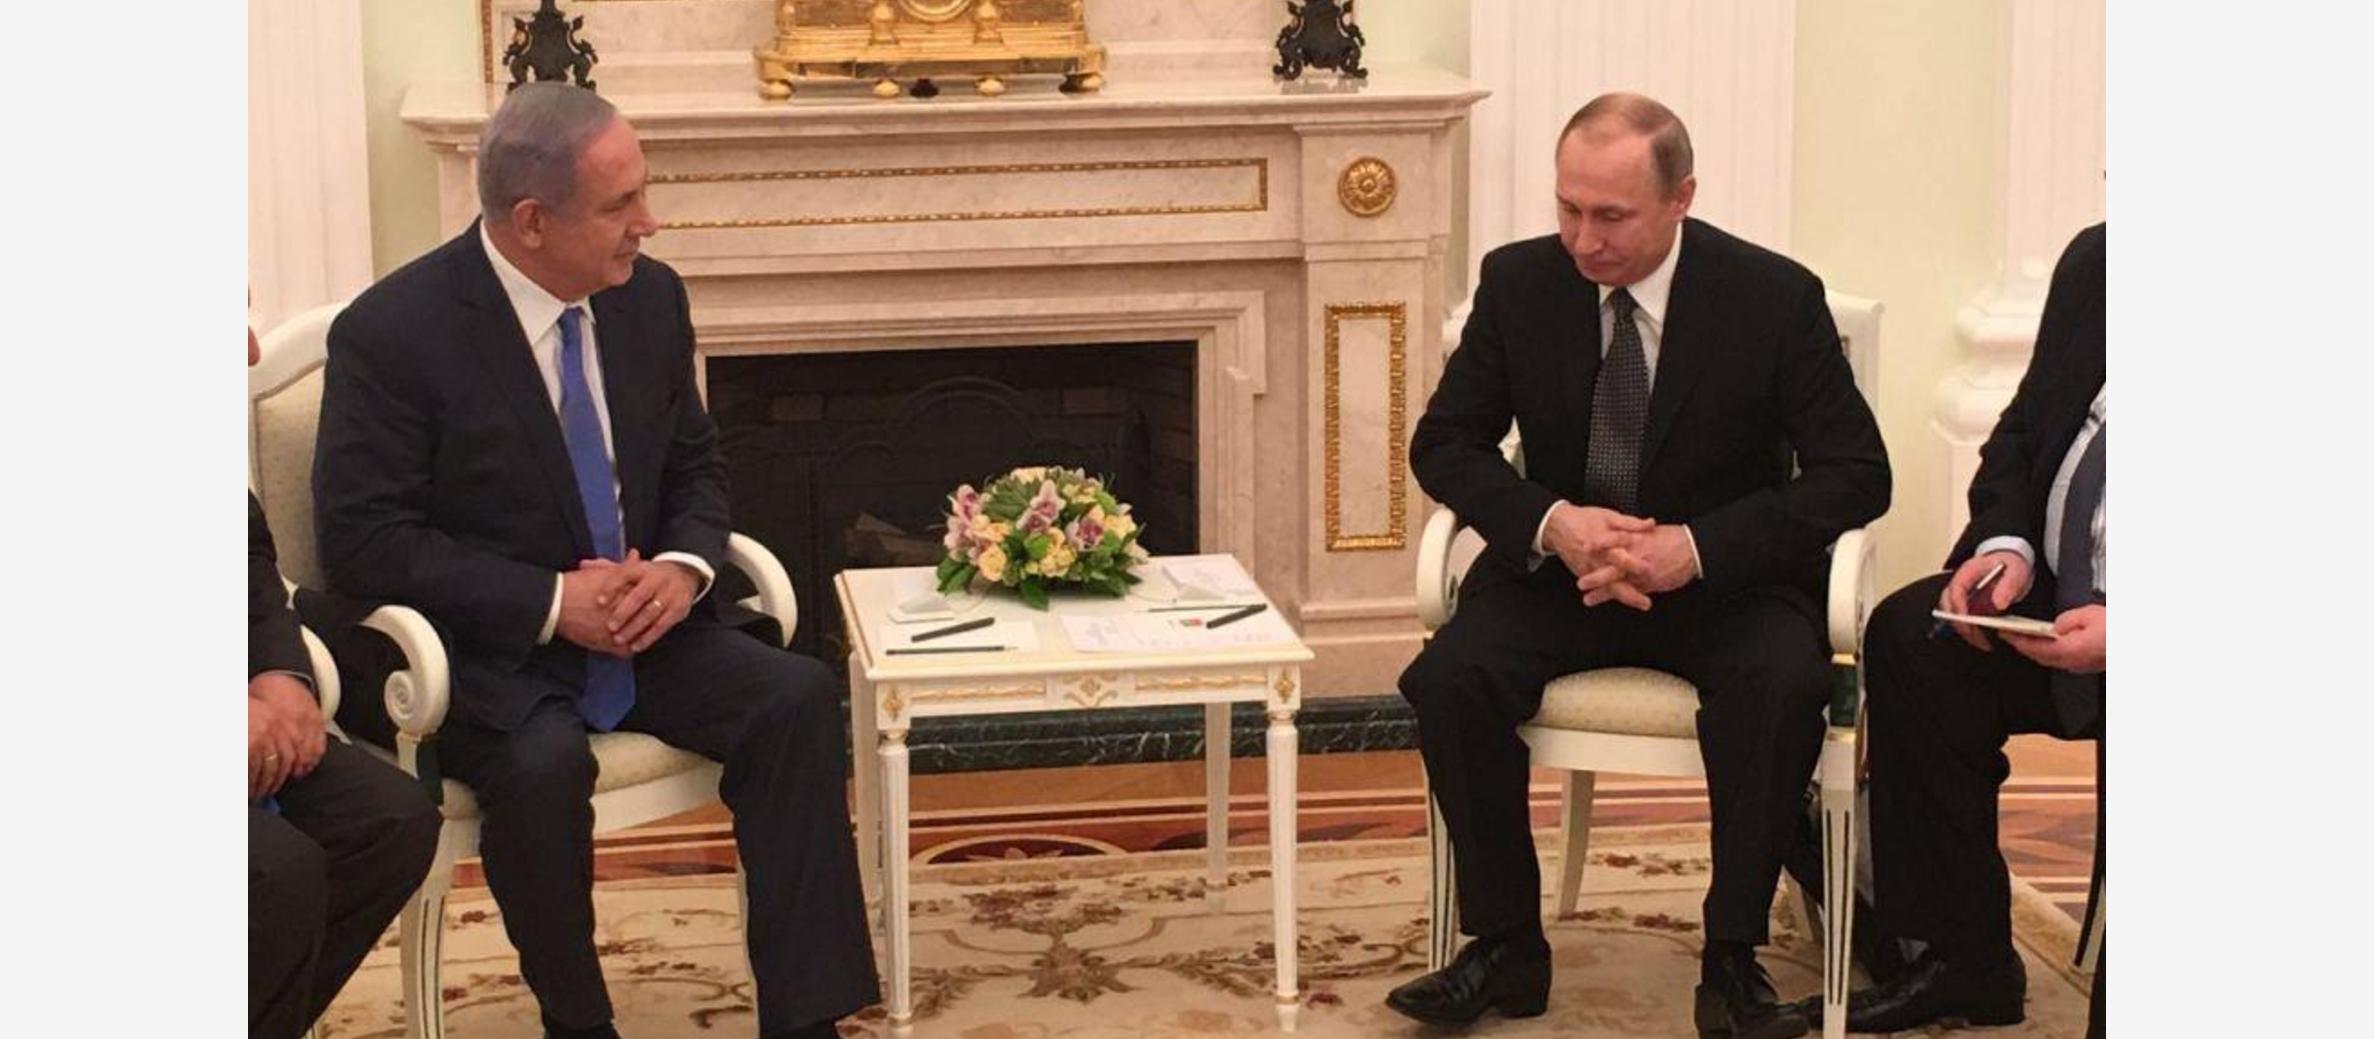 Netanyahu hails “very successful” meeting with Putin